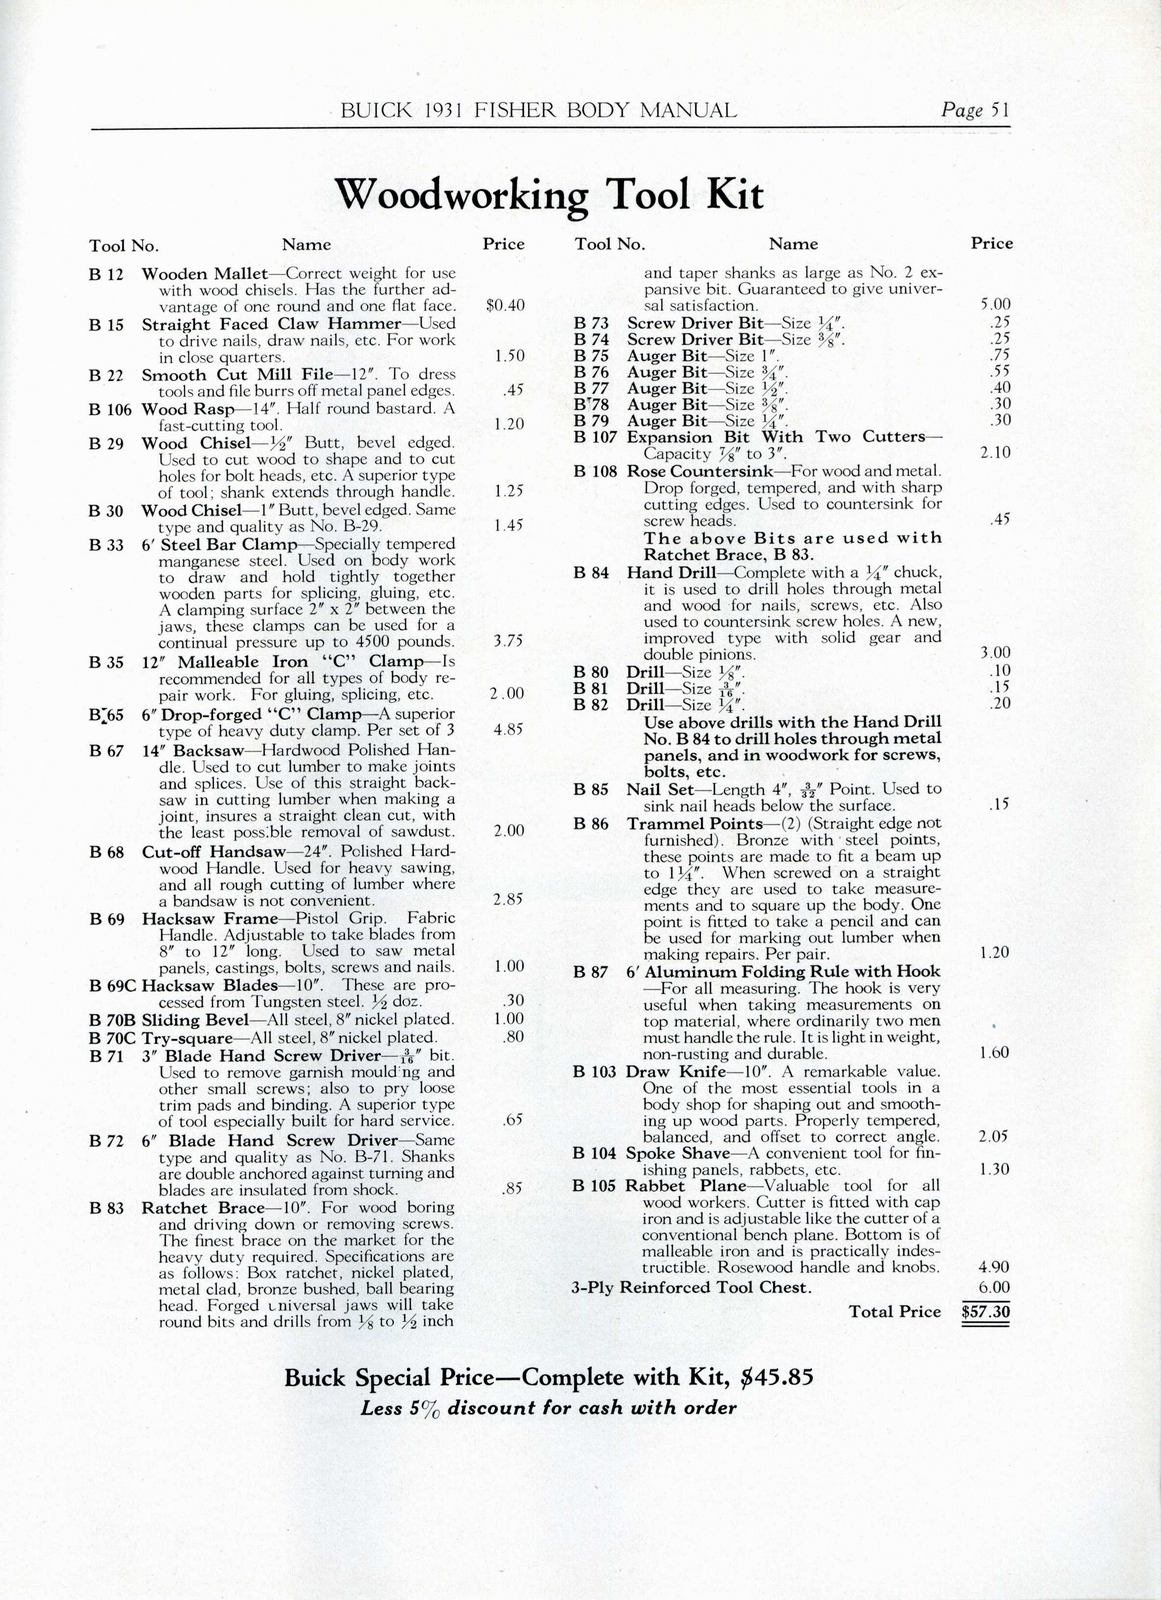 n_1931 Buick Fisher Body Manual-51.jpg